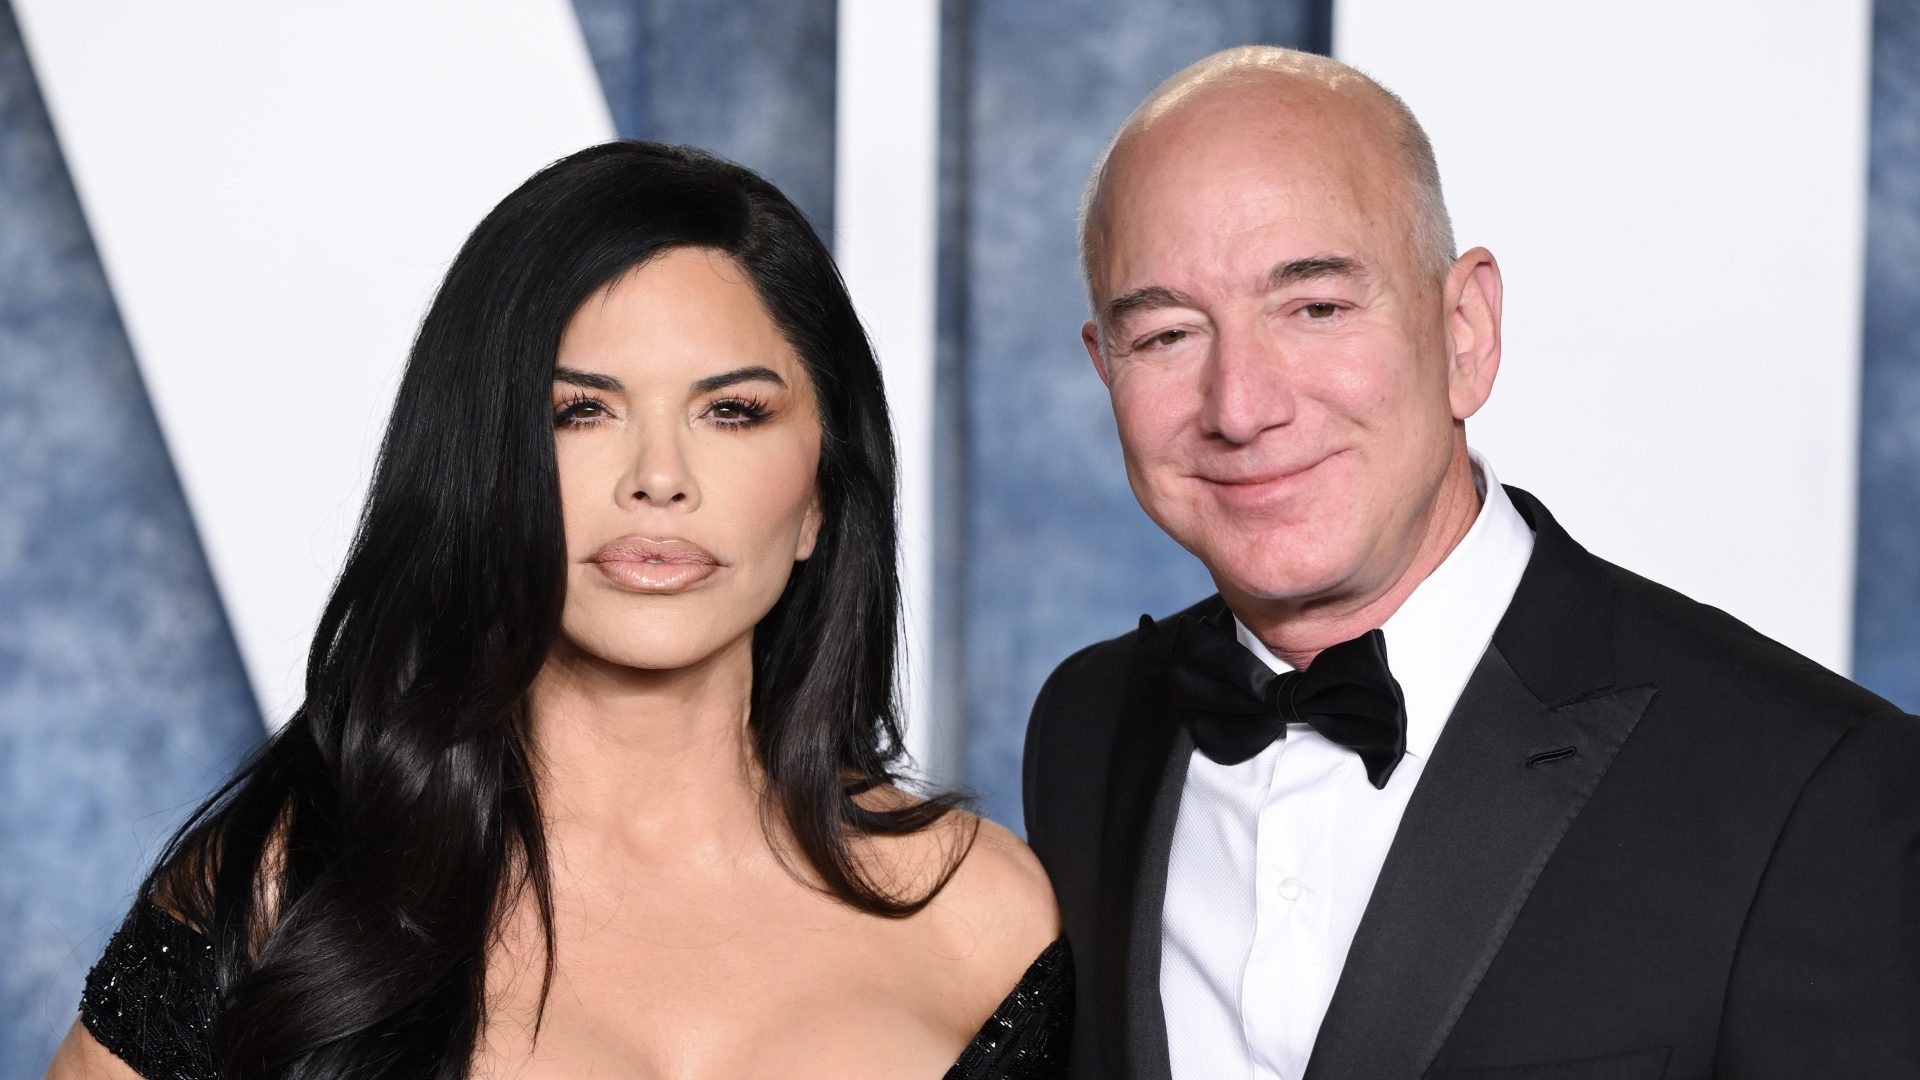 Jeff Bezos Reportedly Engaged To Girlfriend Lauren Sanchez